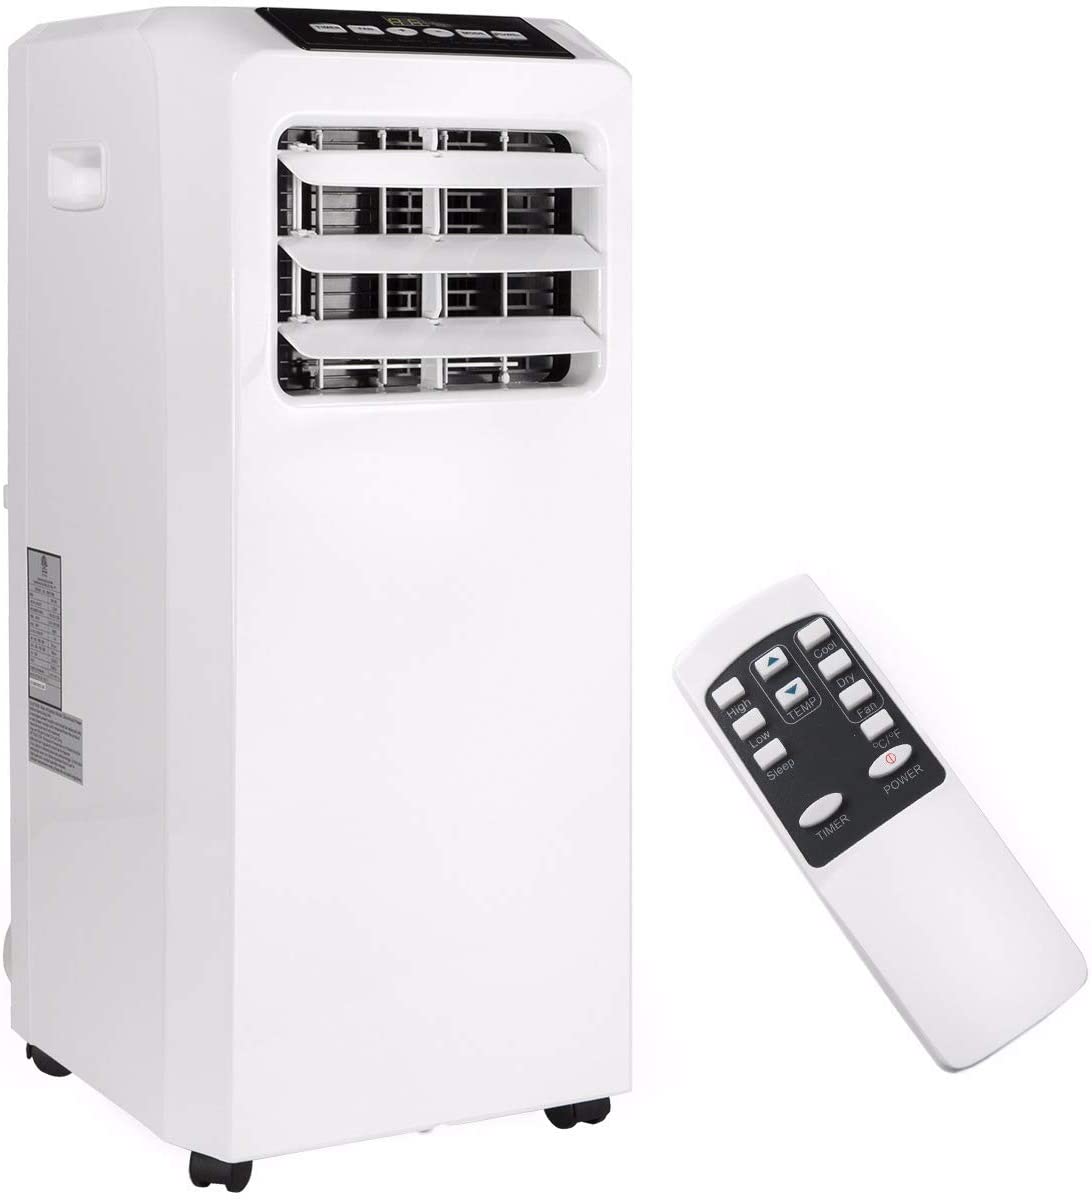 Portable Ac52 8000 BTU Ac Air Conditioner Dehumidifier Fan Unit with Remote, White